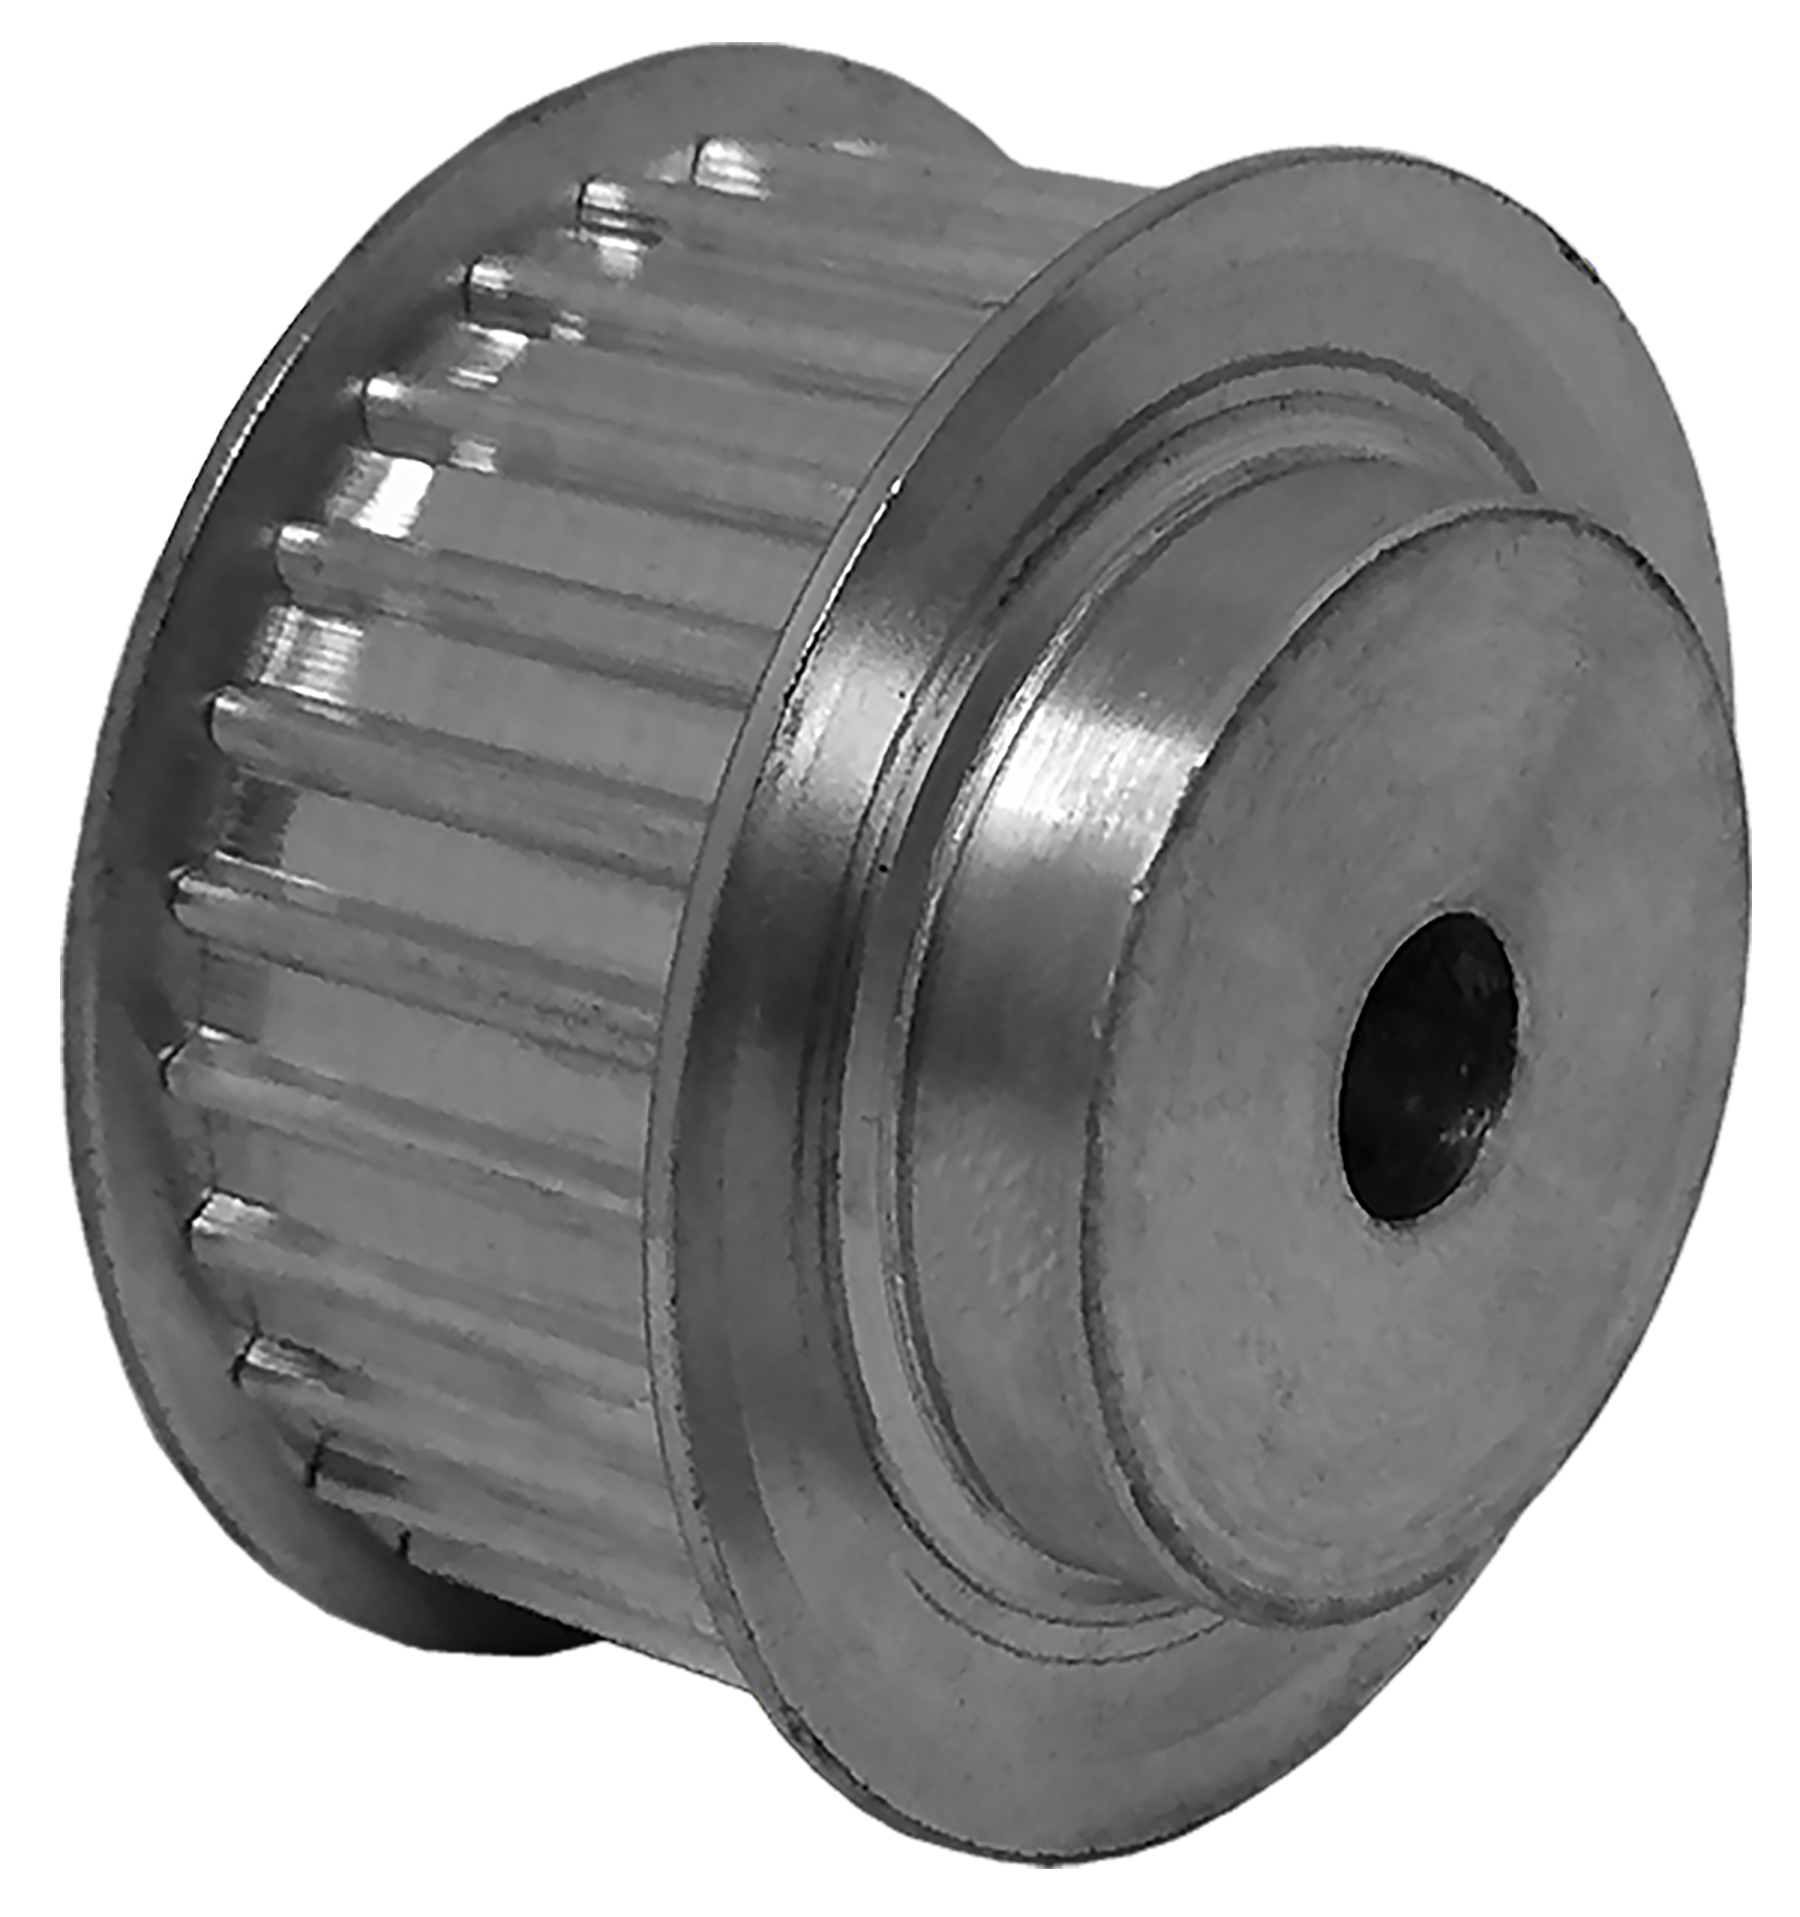 27AT5/27-2 - Aluminum Metric Pulleys